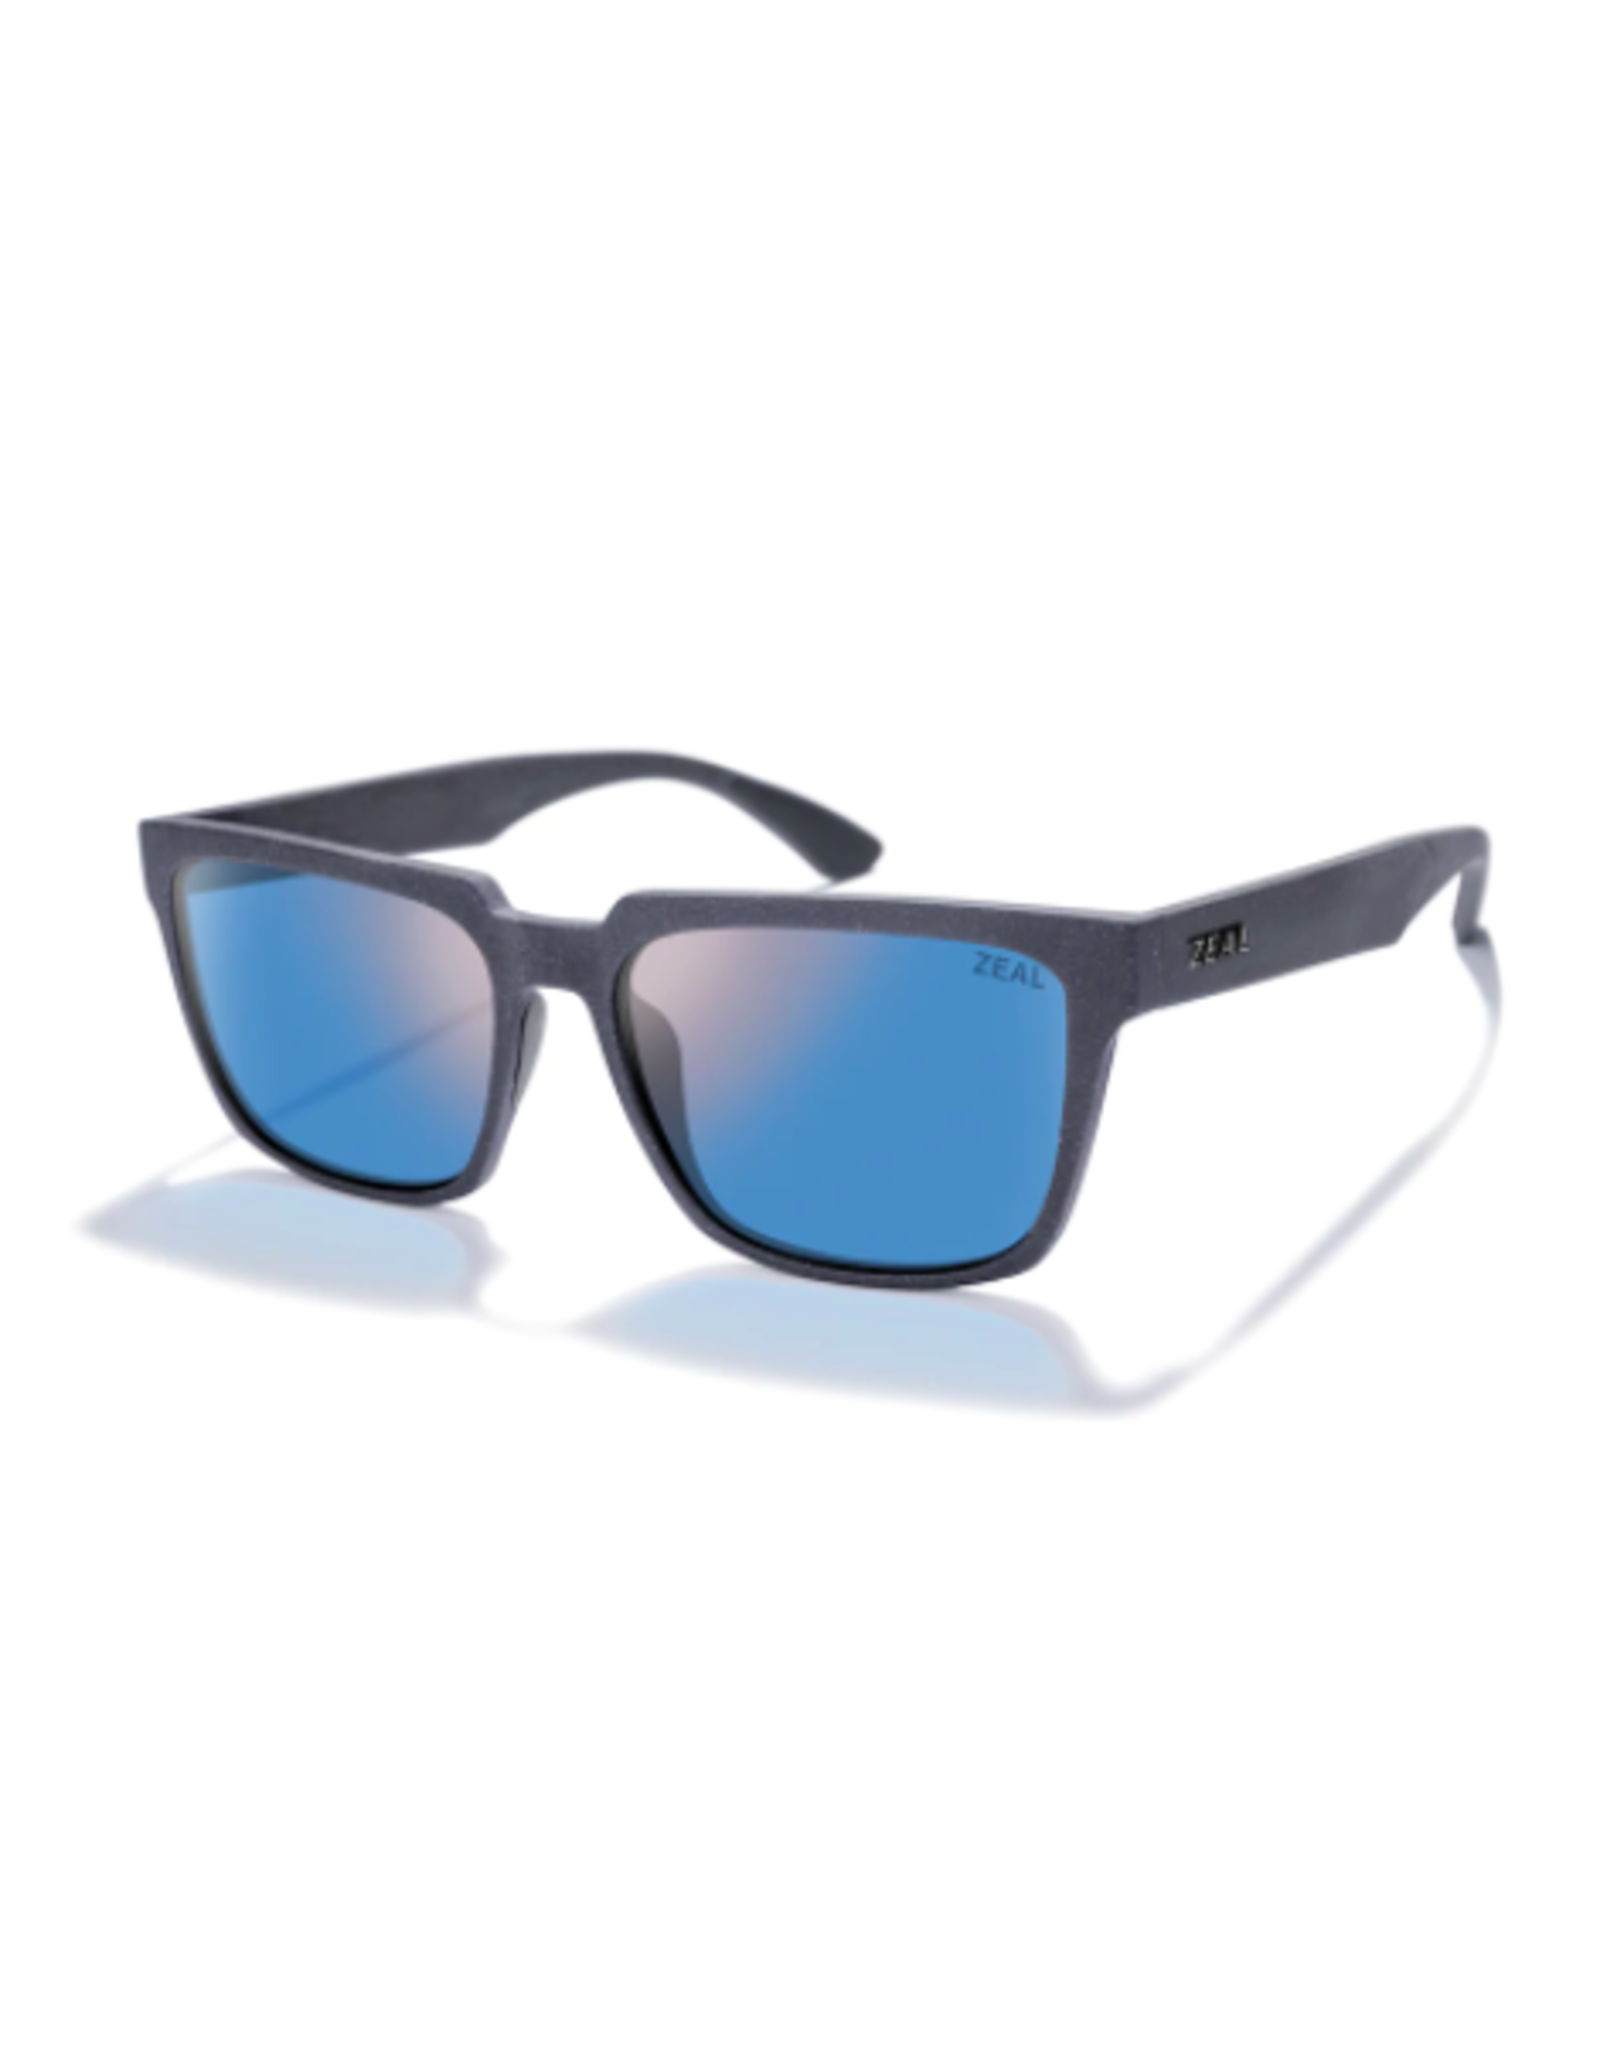 Zeal Northwind Black Grain Sunglasses with Horizon Blue Polarized Lens